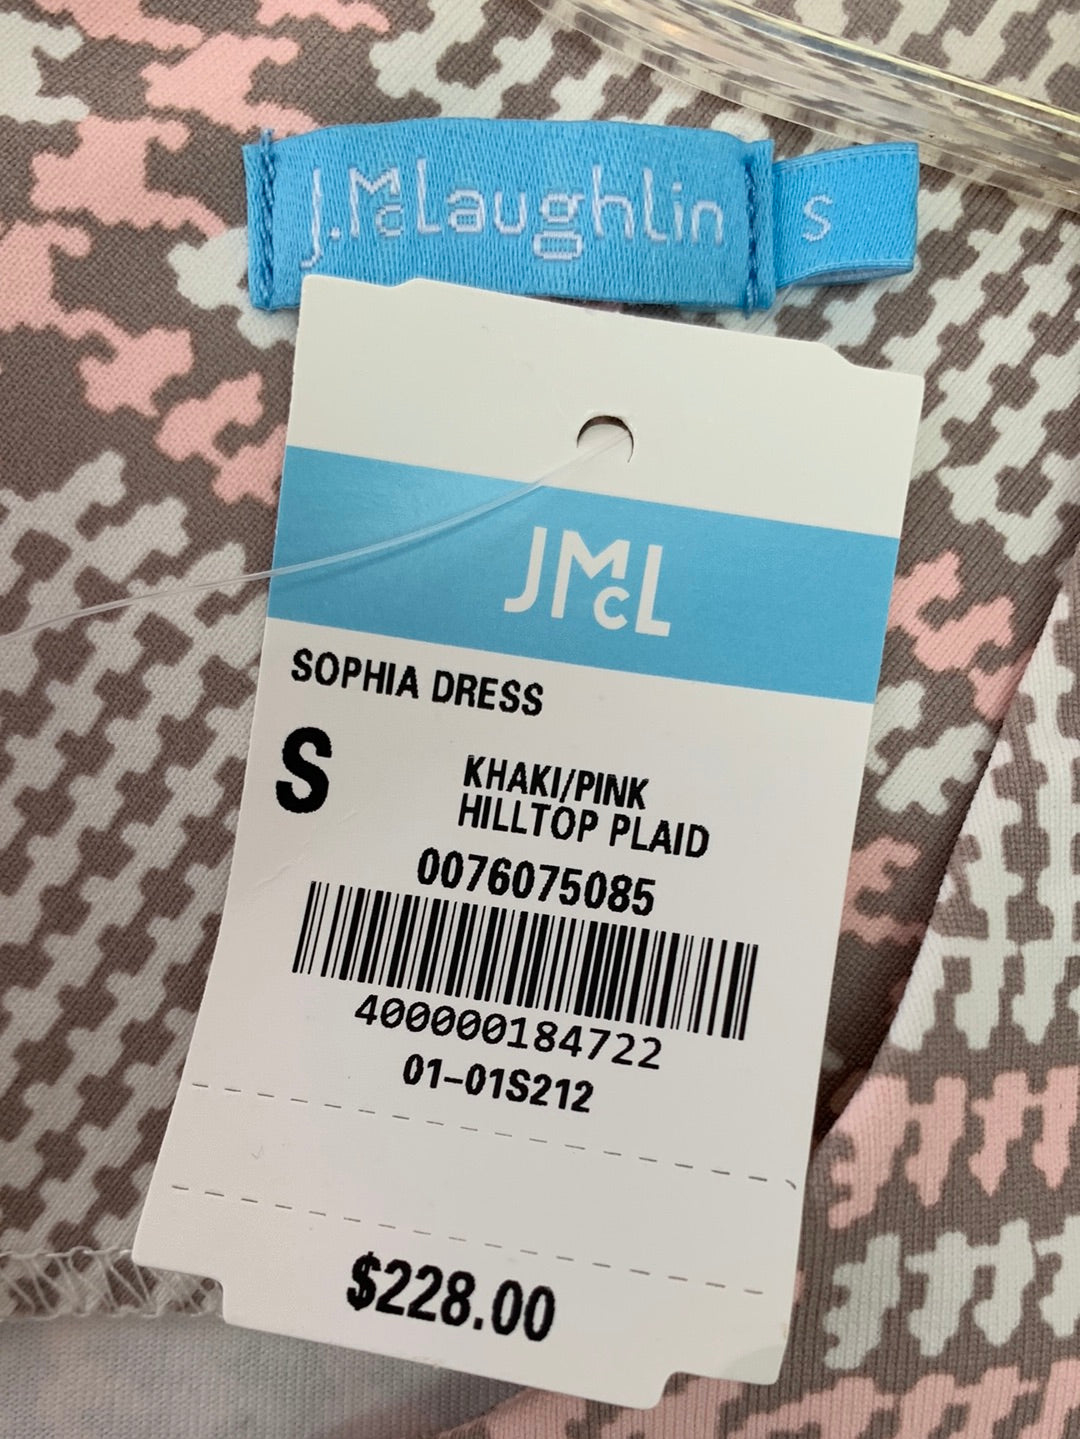 NWT - J. MCLAUGHLIN khaki pink Hilltop Plaid 3/4 Sleeve Sophia Dress - Small